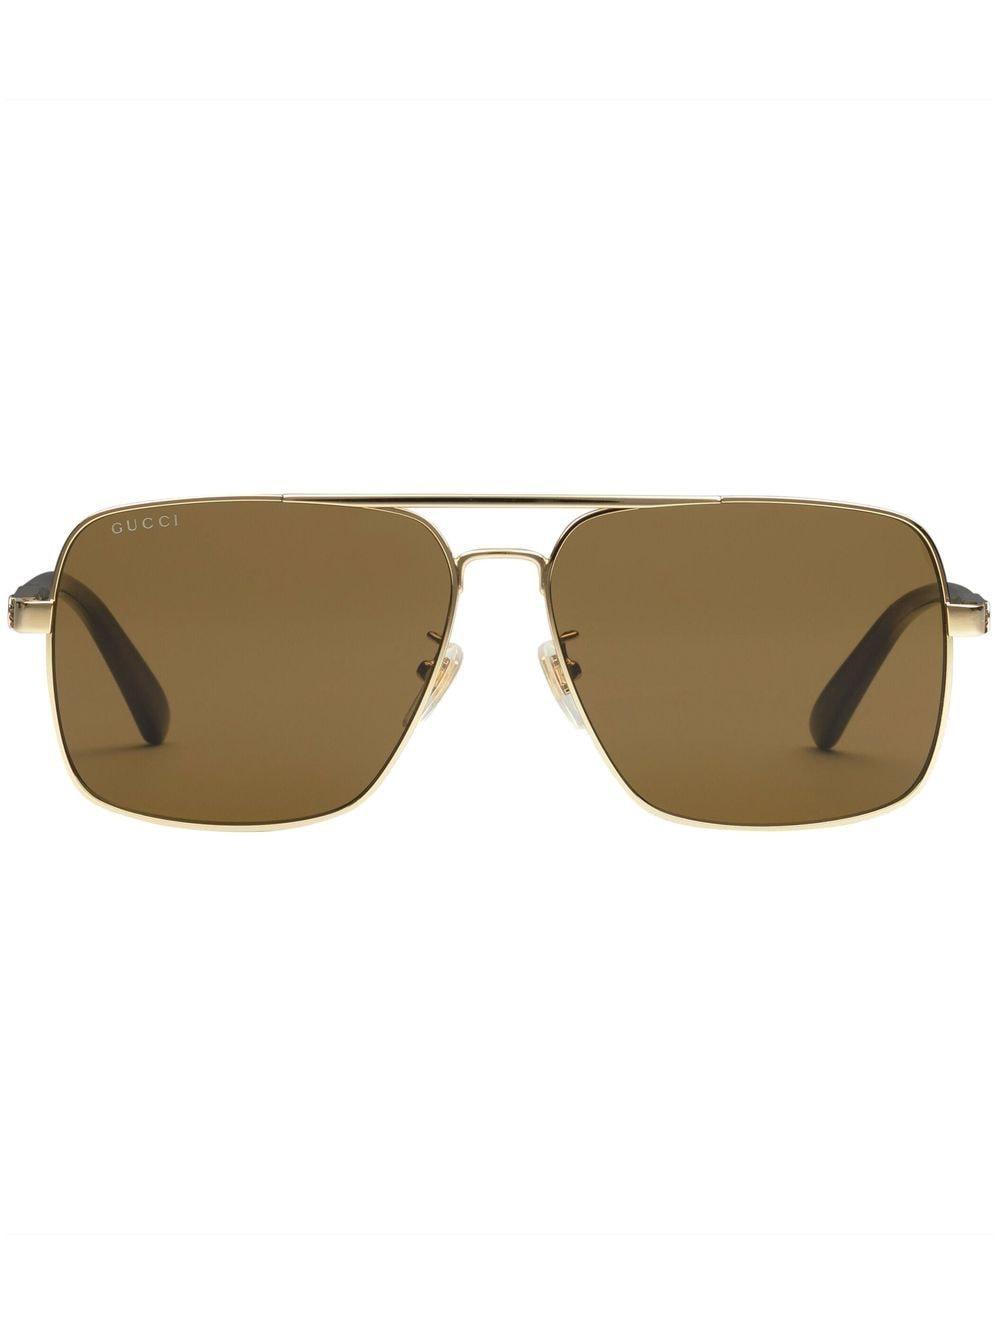 Gucci Navigator Double Bridge Sunglasses In Natural For Men Lyst